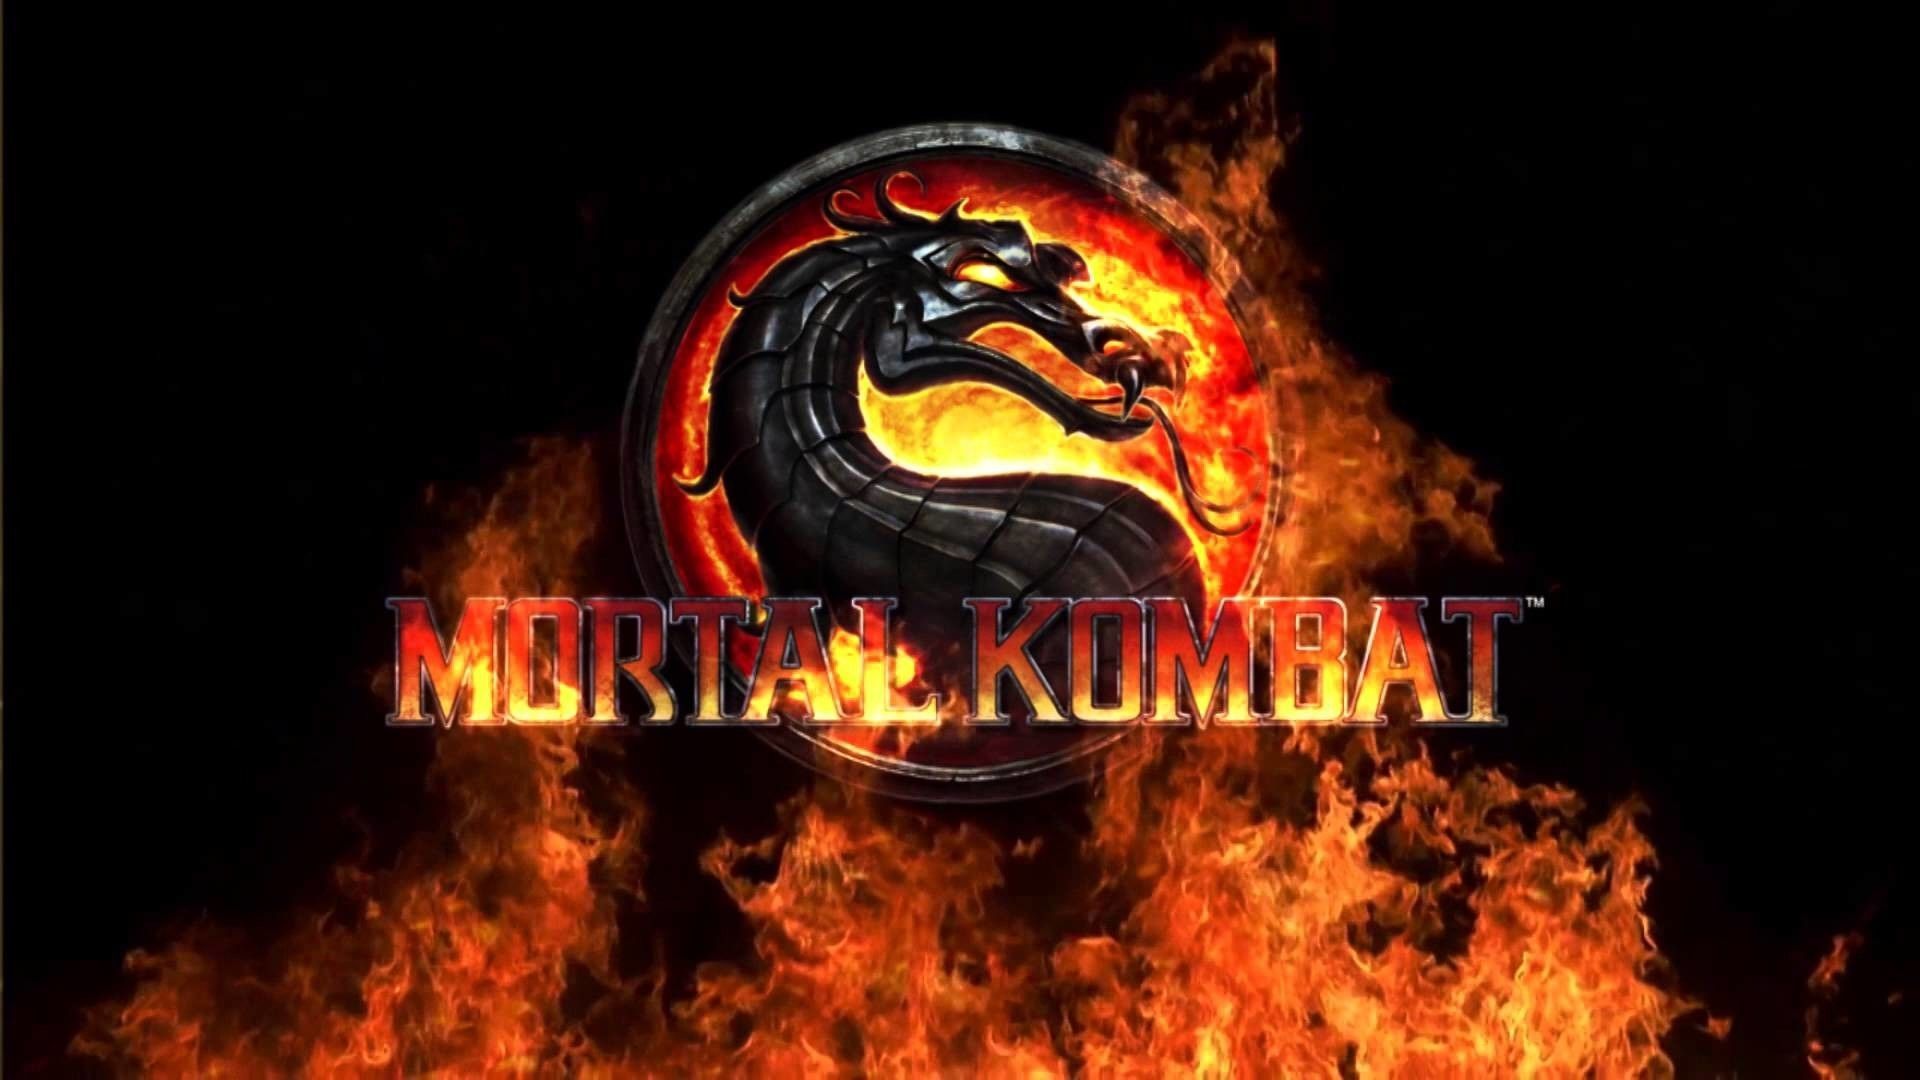 mortal kombat logo wallpaper for desktop